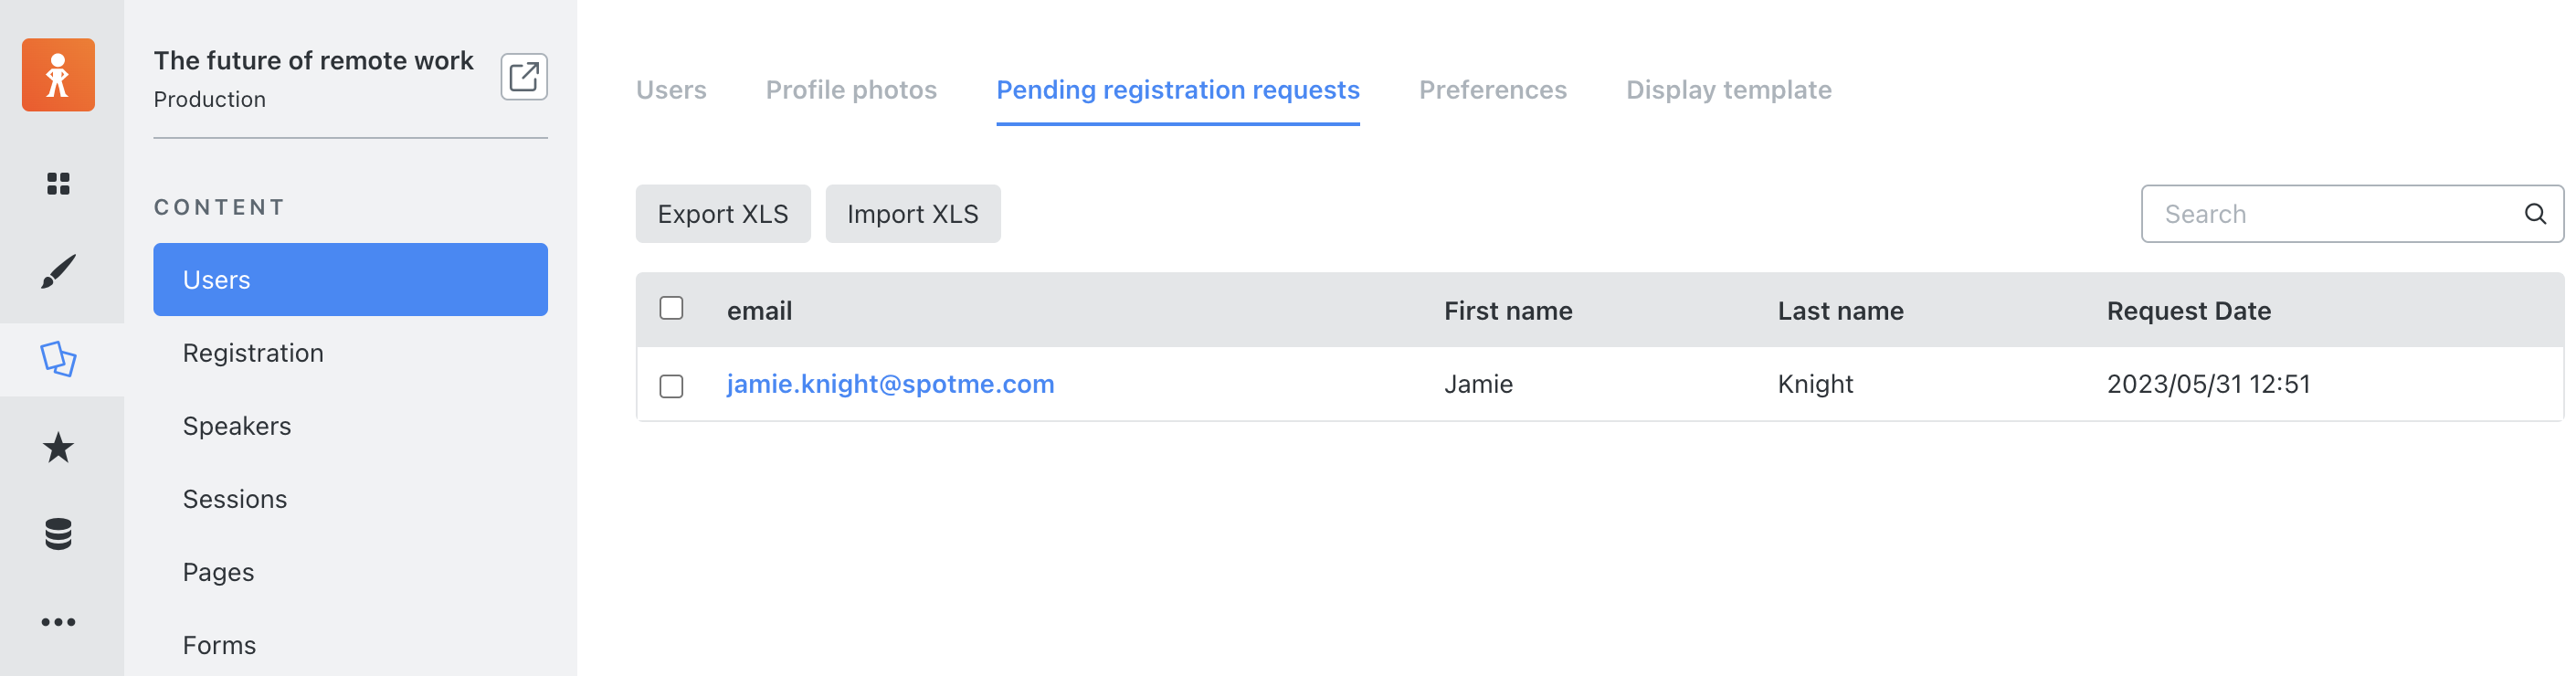 Pending_registration_requests.png